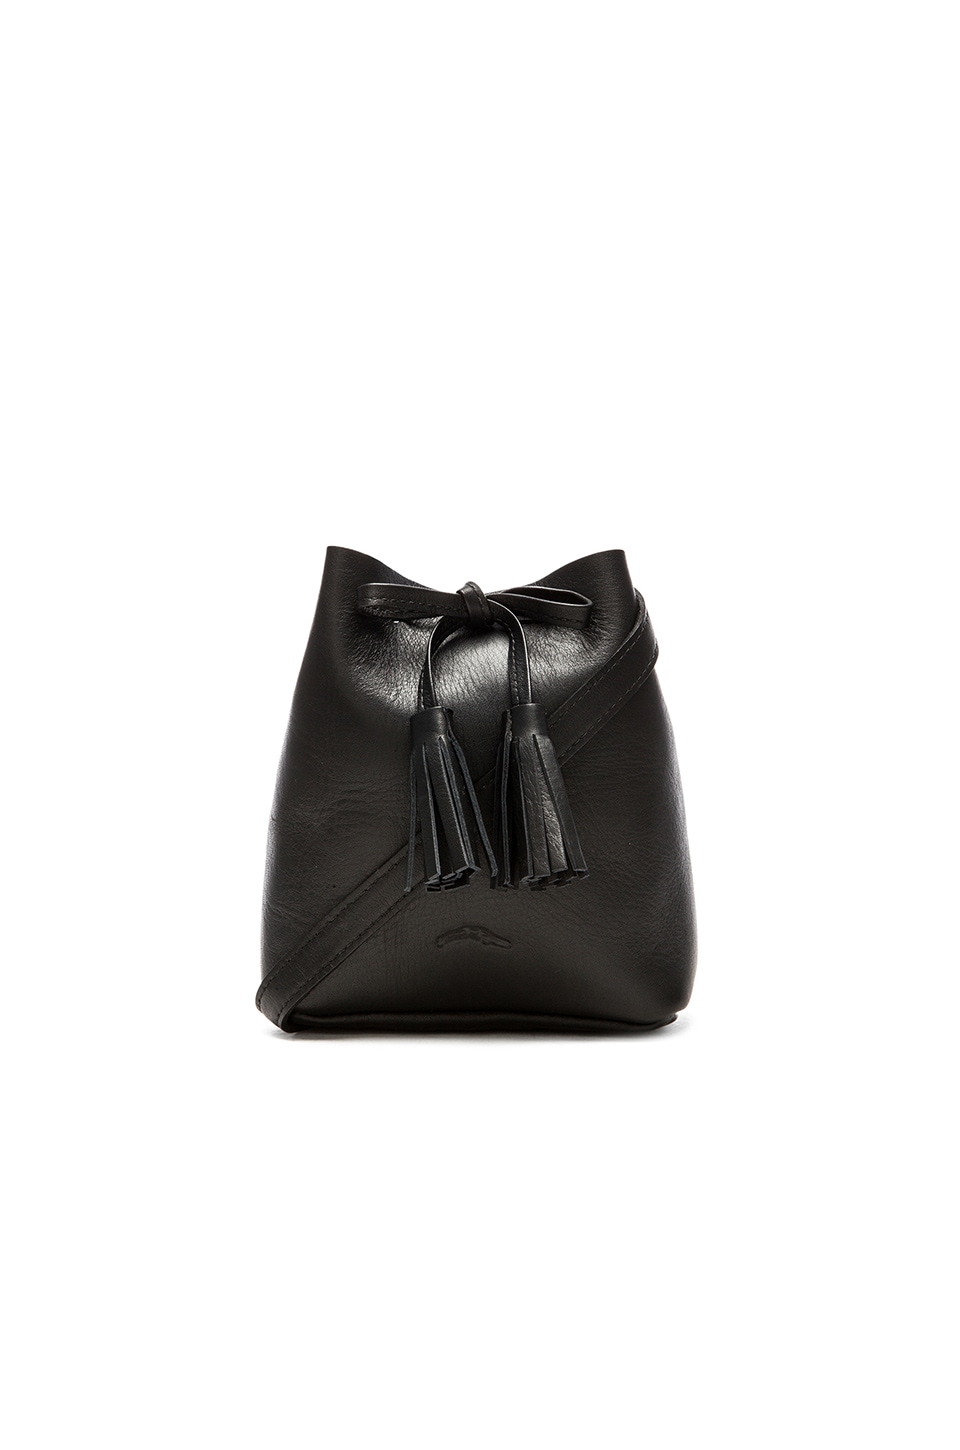 Shaffer The Greta Bucket Bag in Black | REVOLVE